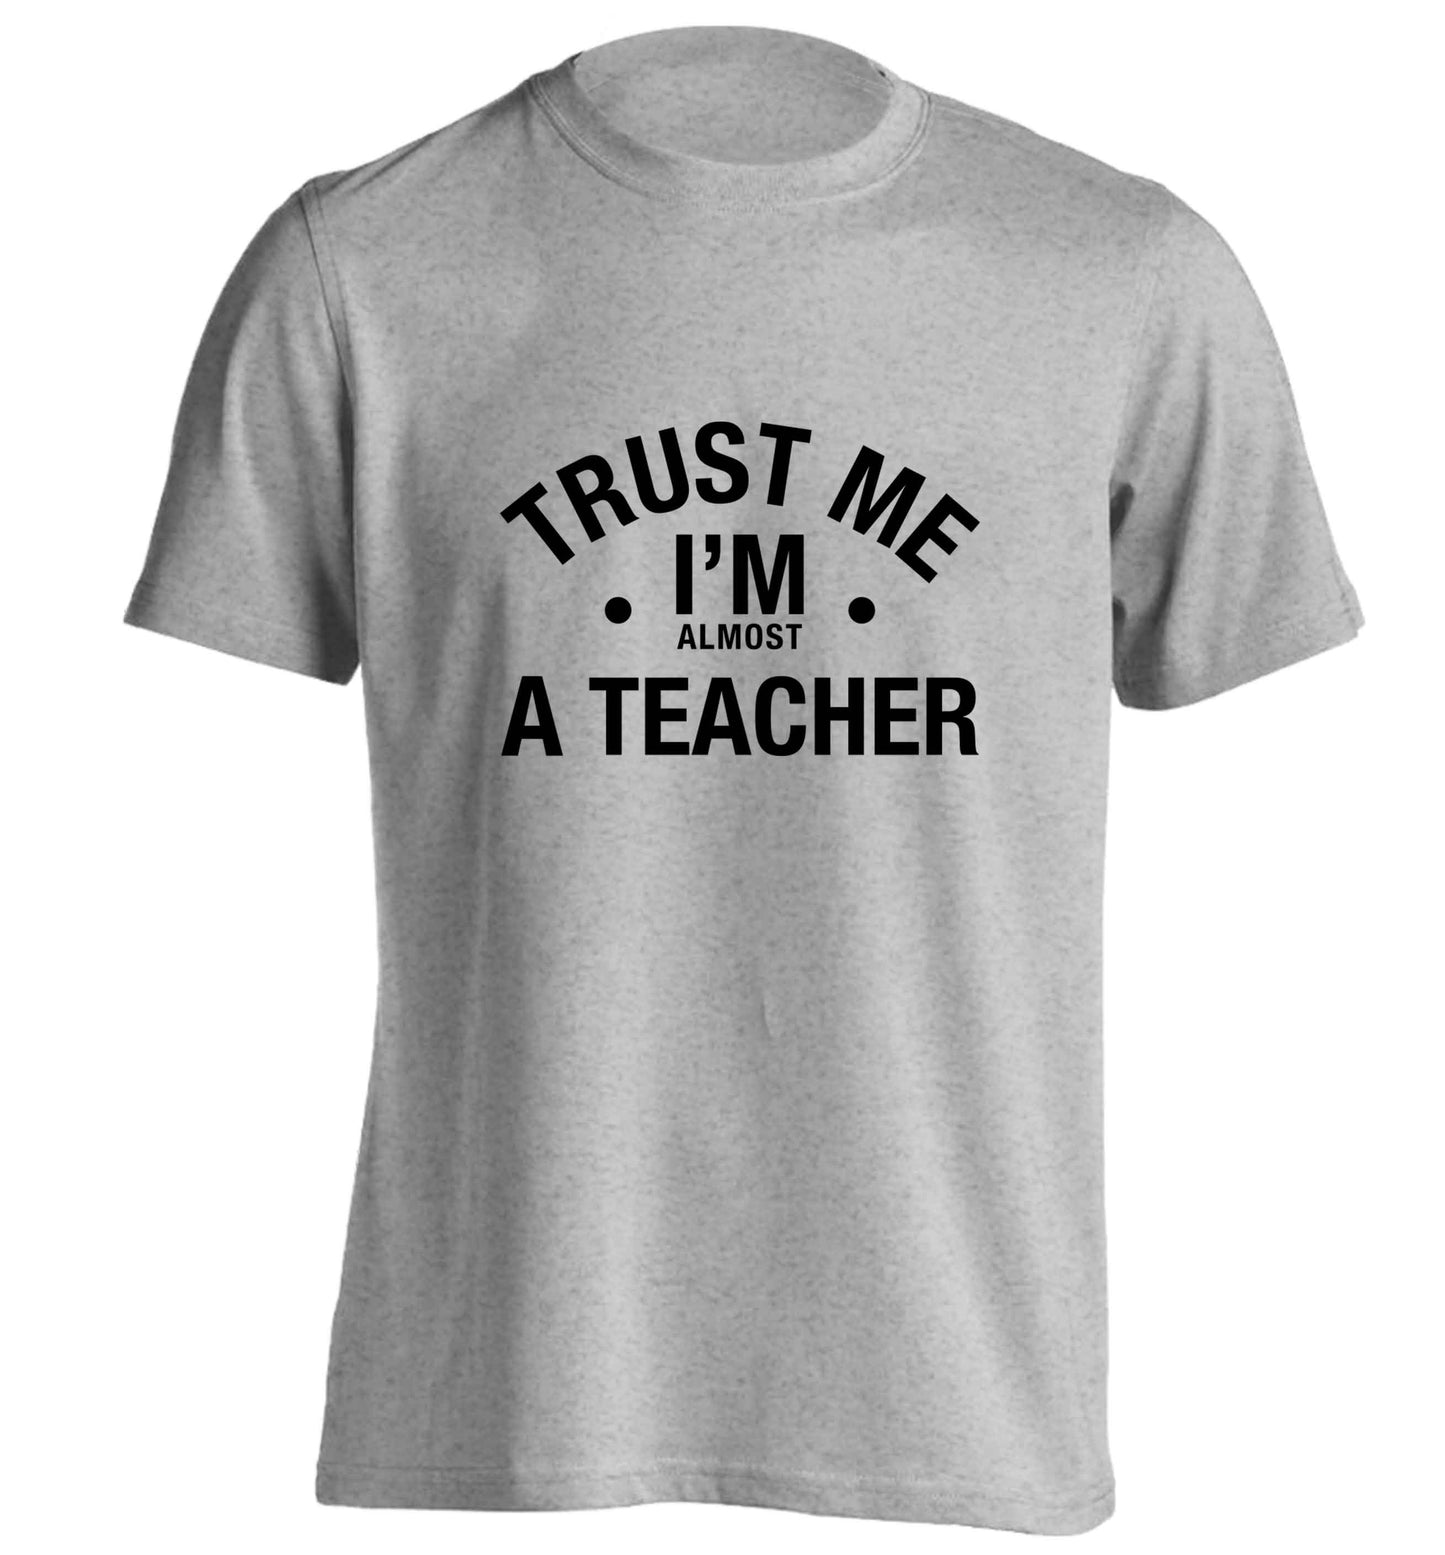 Trust me I'm almost a teacher adults unisex grey Tshirt 2XL